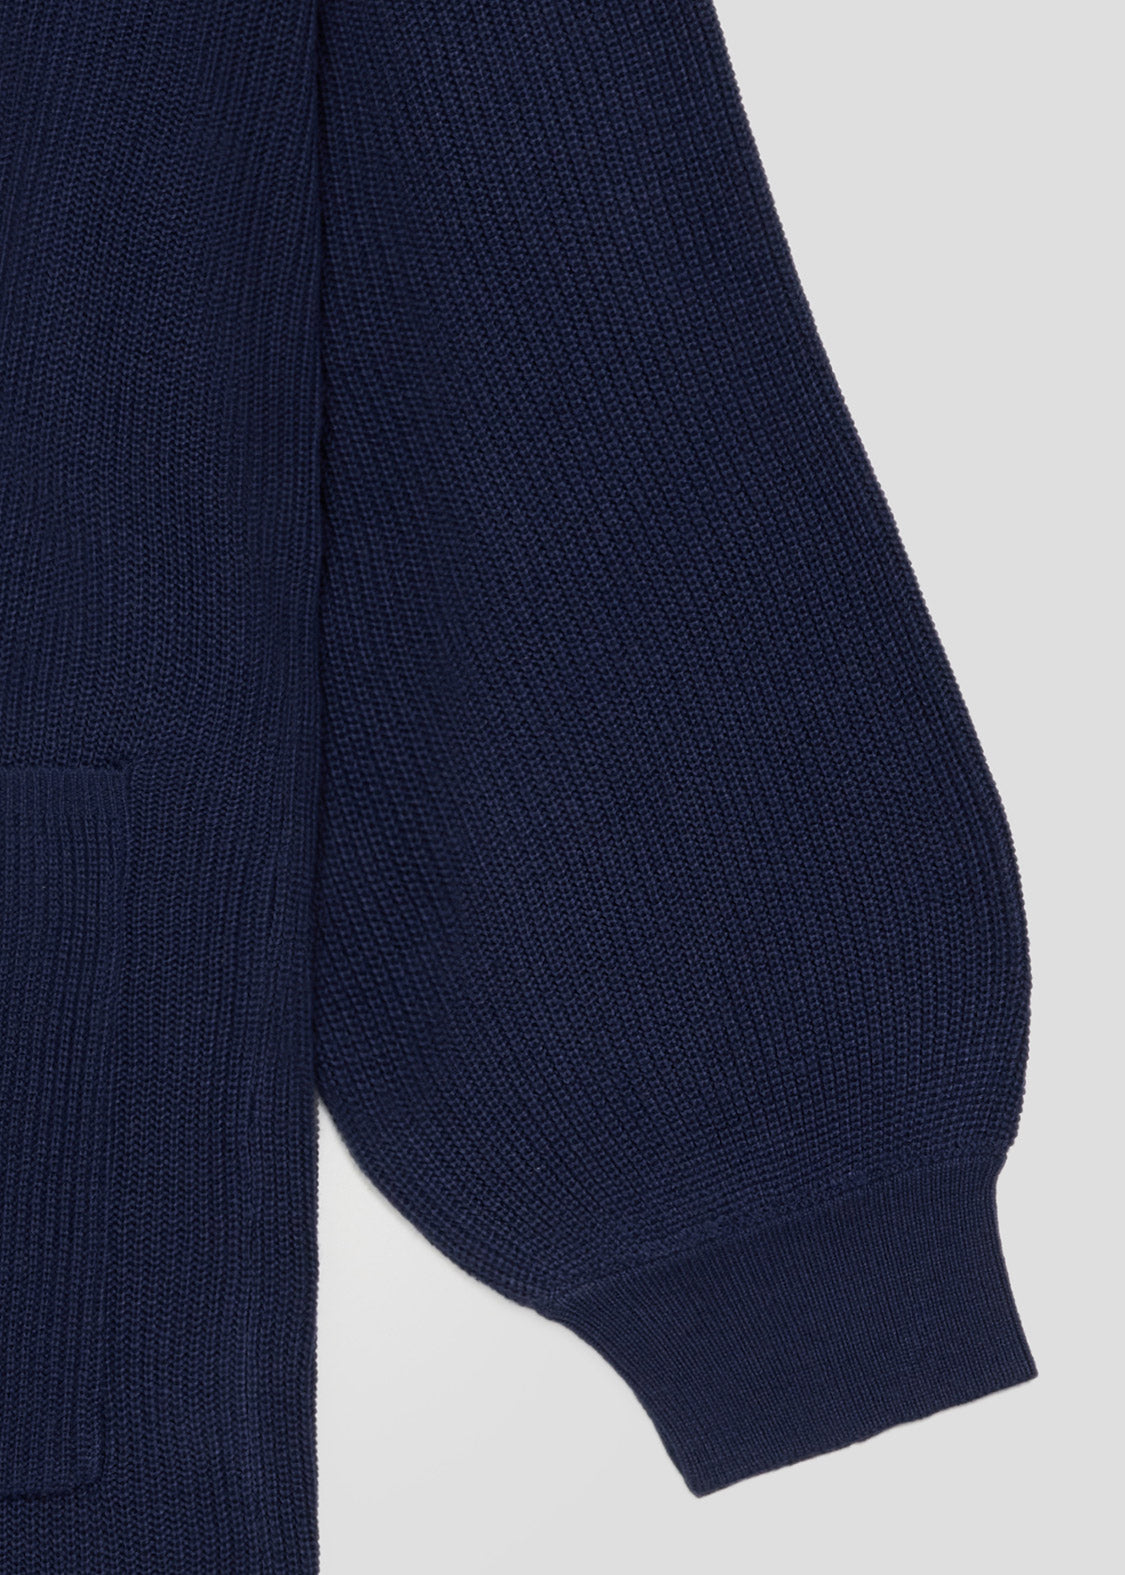 Long Sleeve Knit Cardigan (Pattern of Diamond)